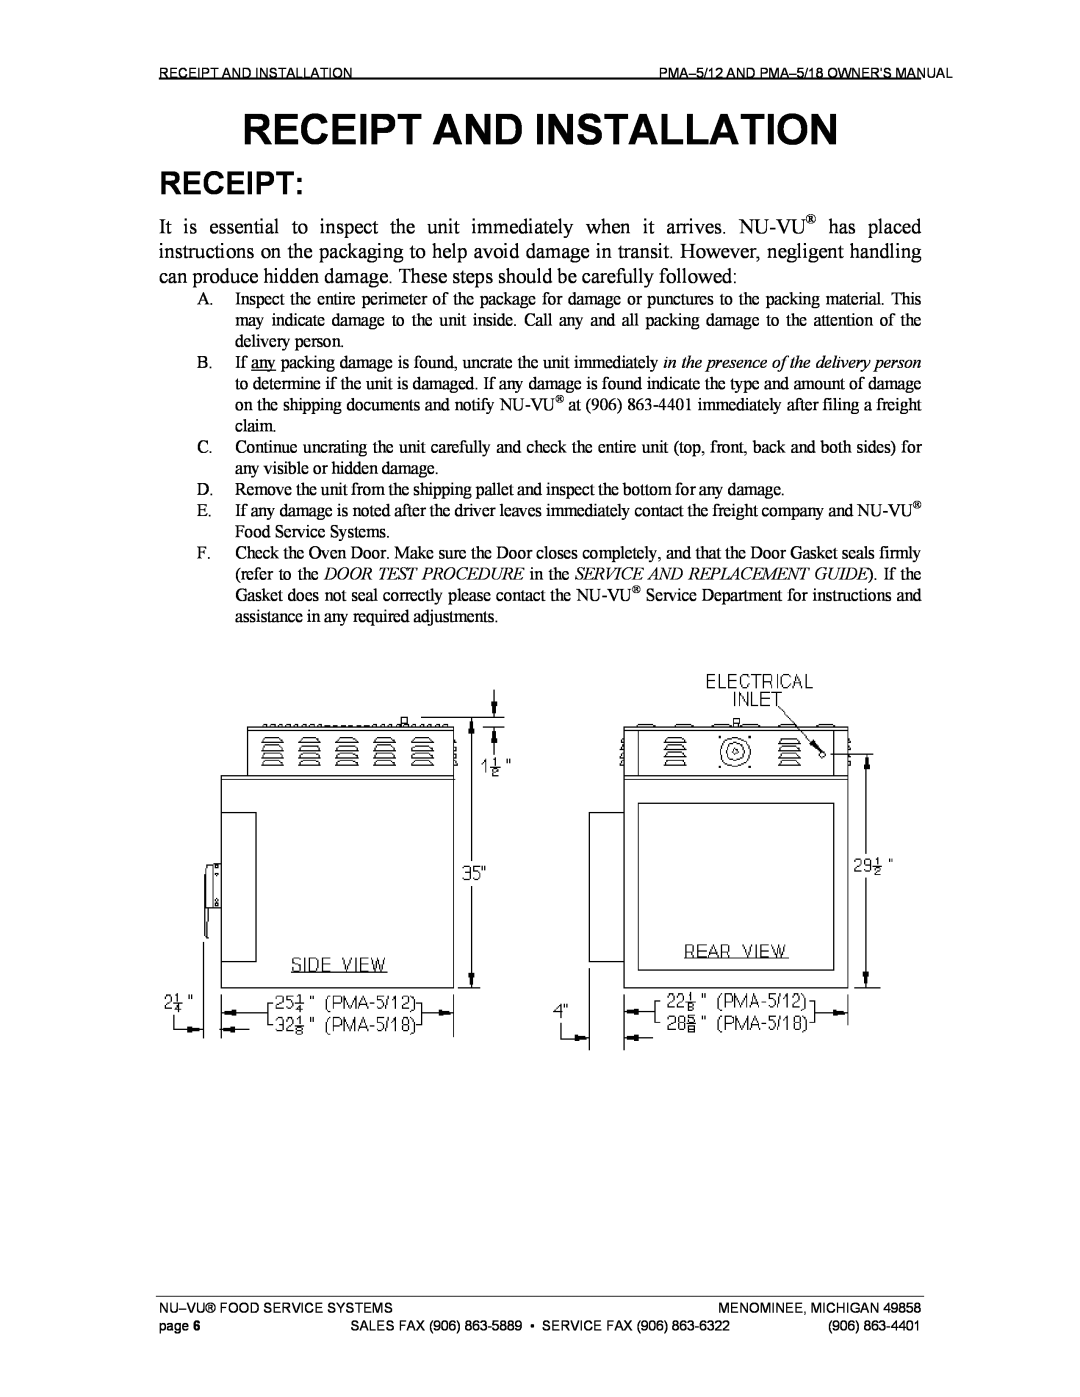 Nu-Vu PMA 5/18, PMA -5/12 owner manual Receipt And Installation 